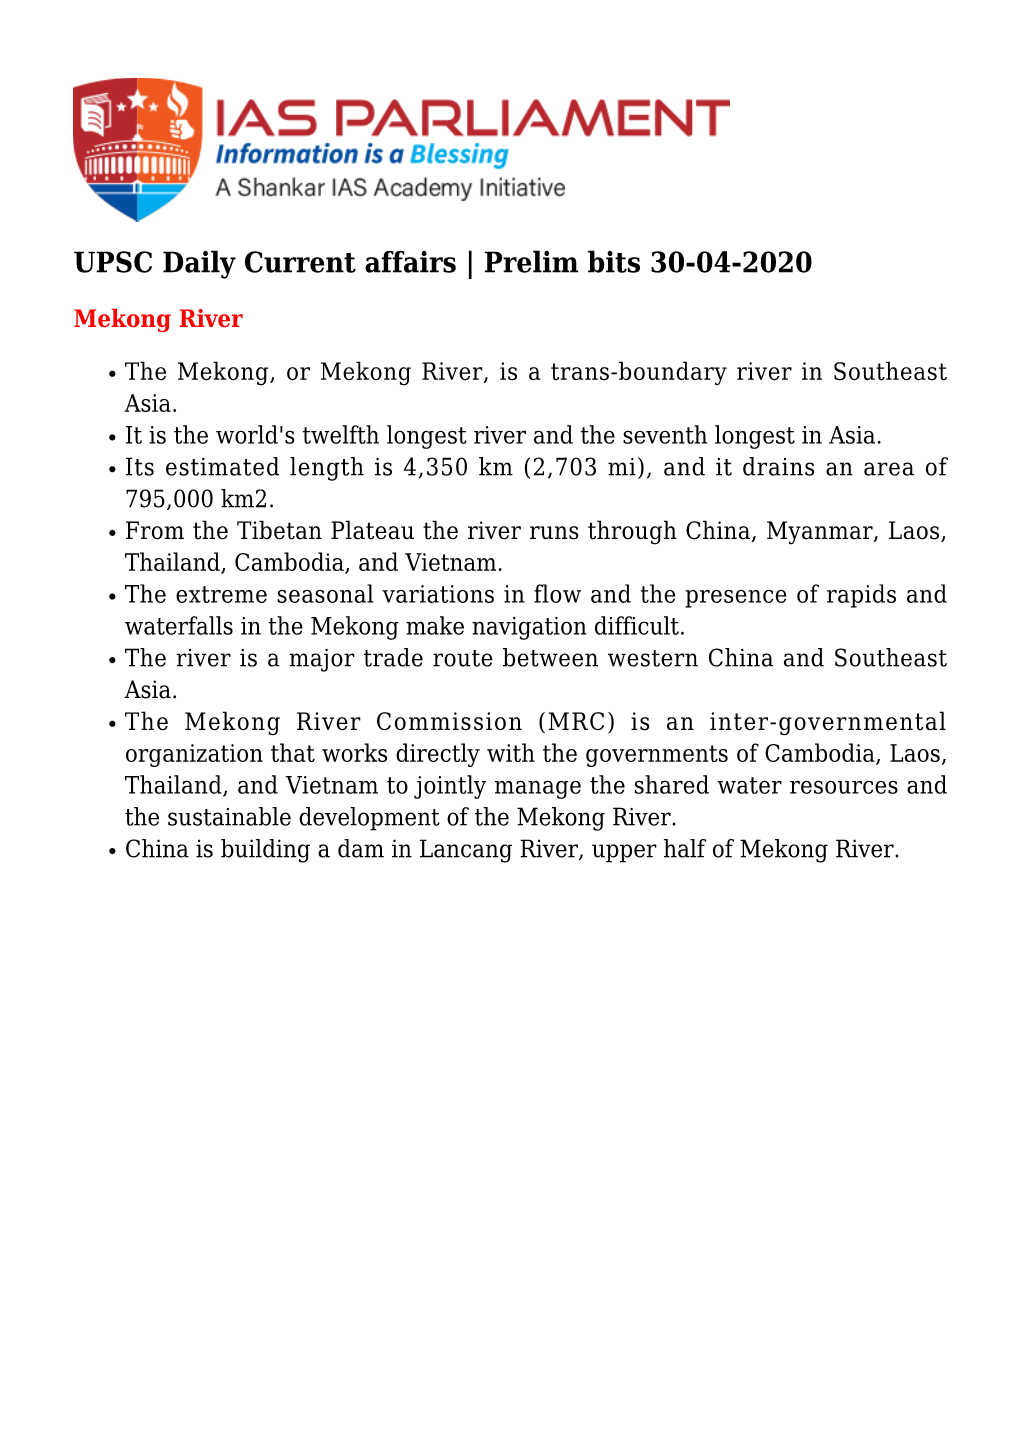 UPSC Daily Current Affairs | Prelim Bits 30-04-2020